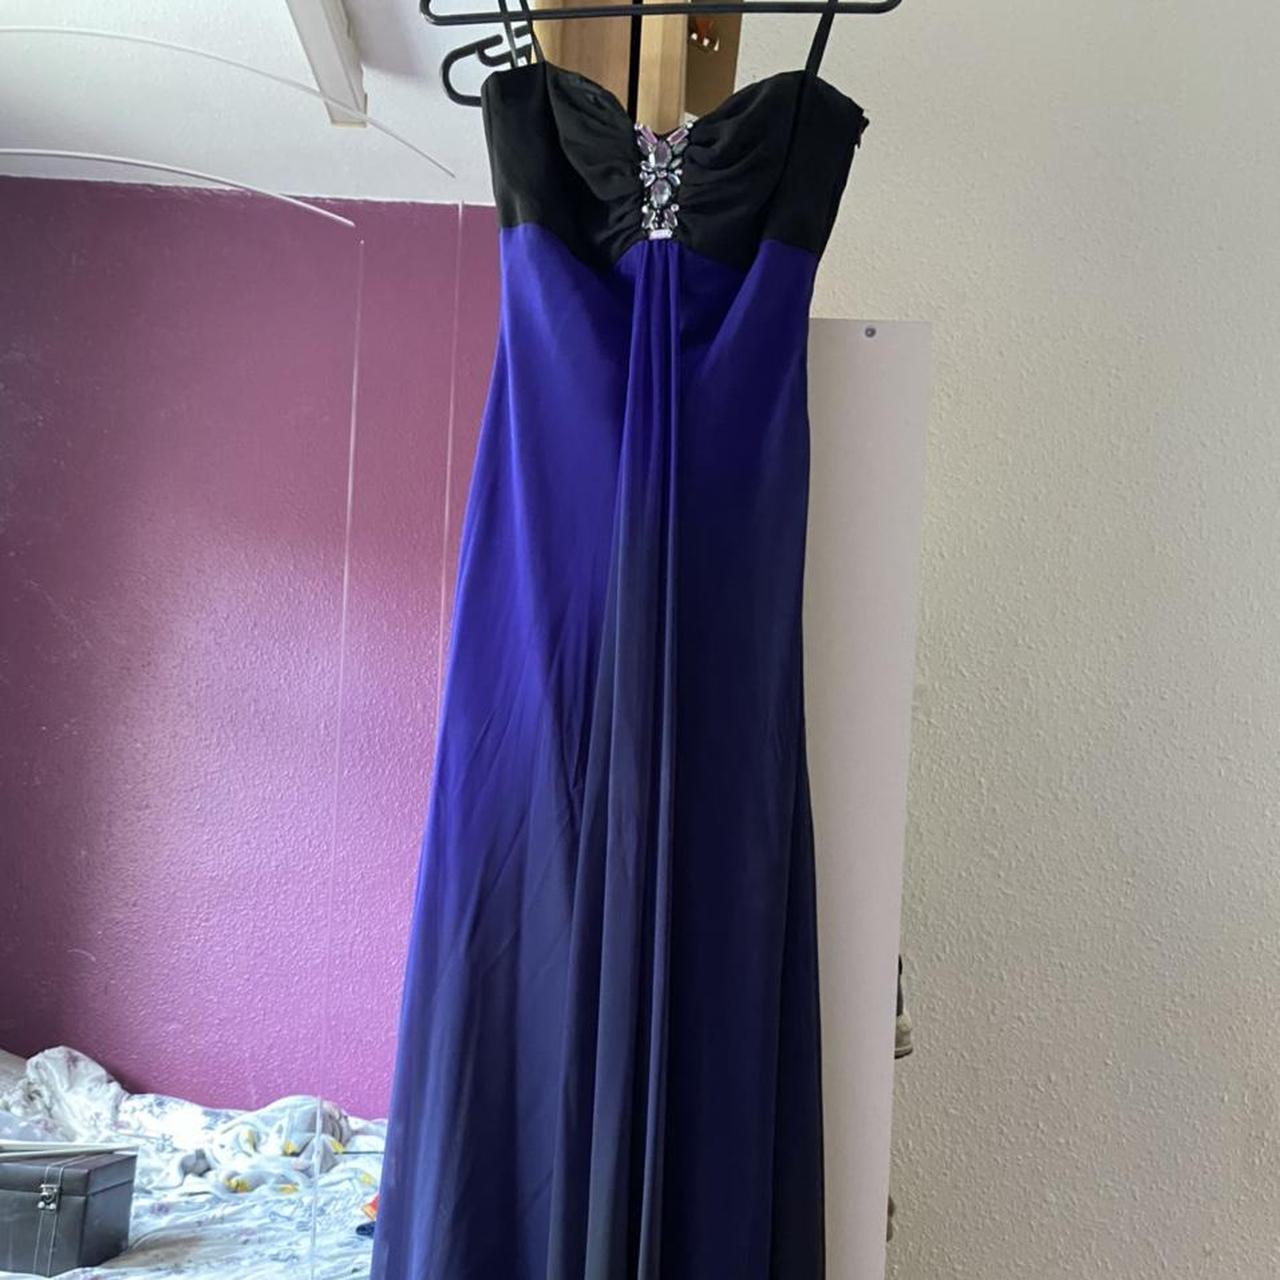 Women’s blue and purple ombré prom dress - Depop